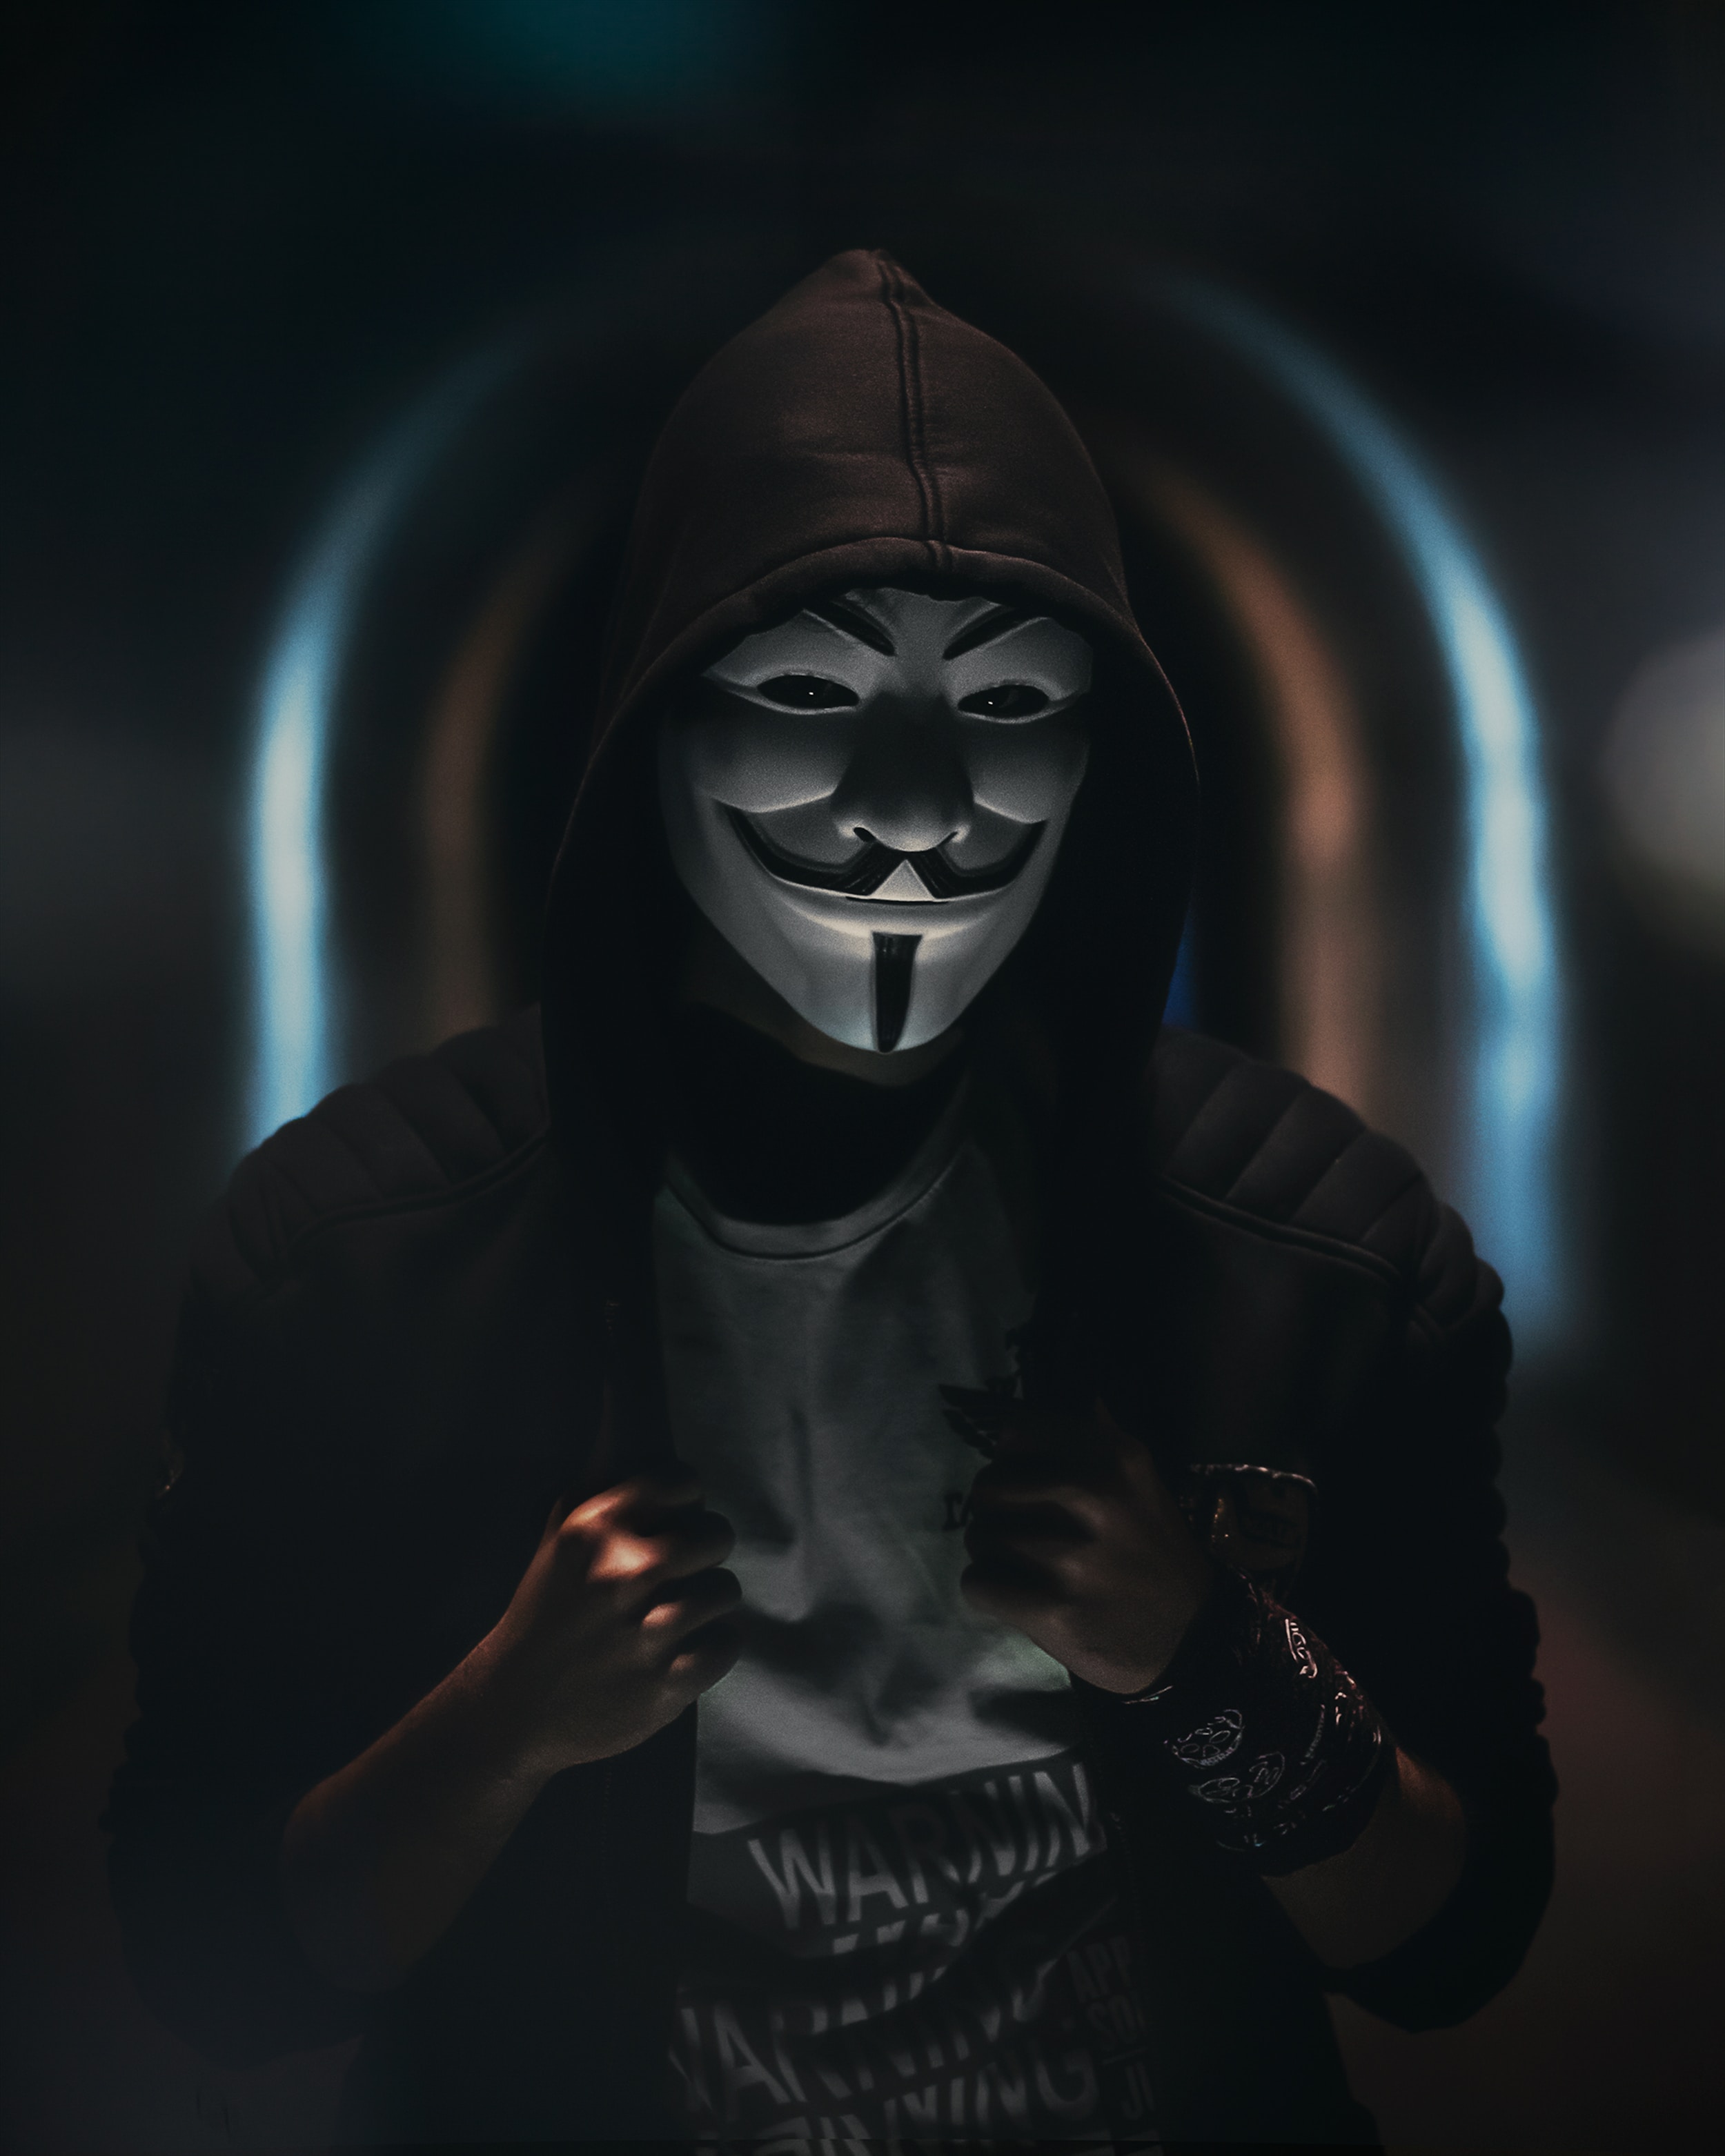 Free HD dark, anonymous, mask, hood, person, human, miscellanea, miscellaneous